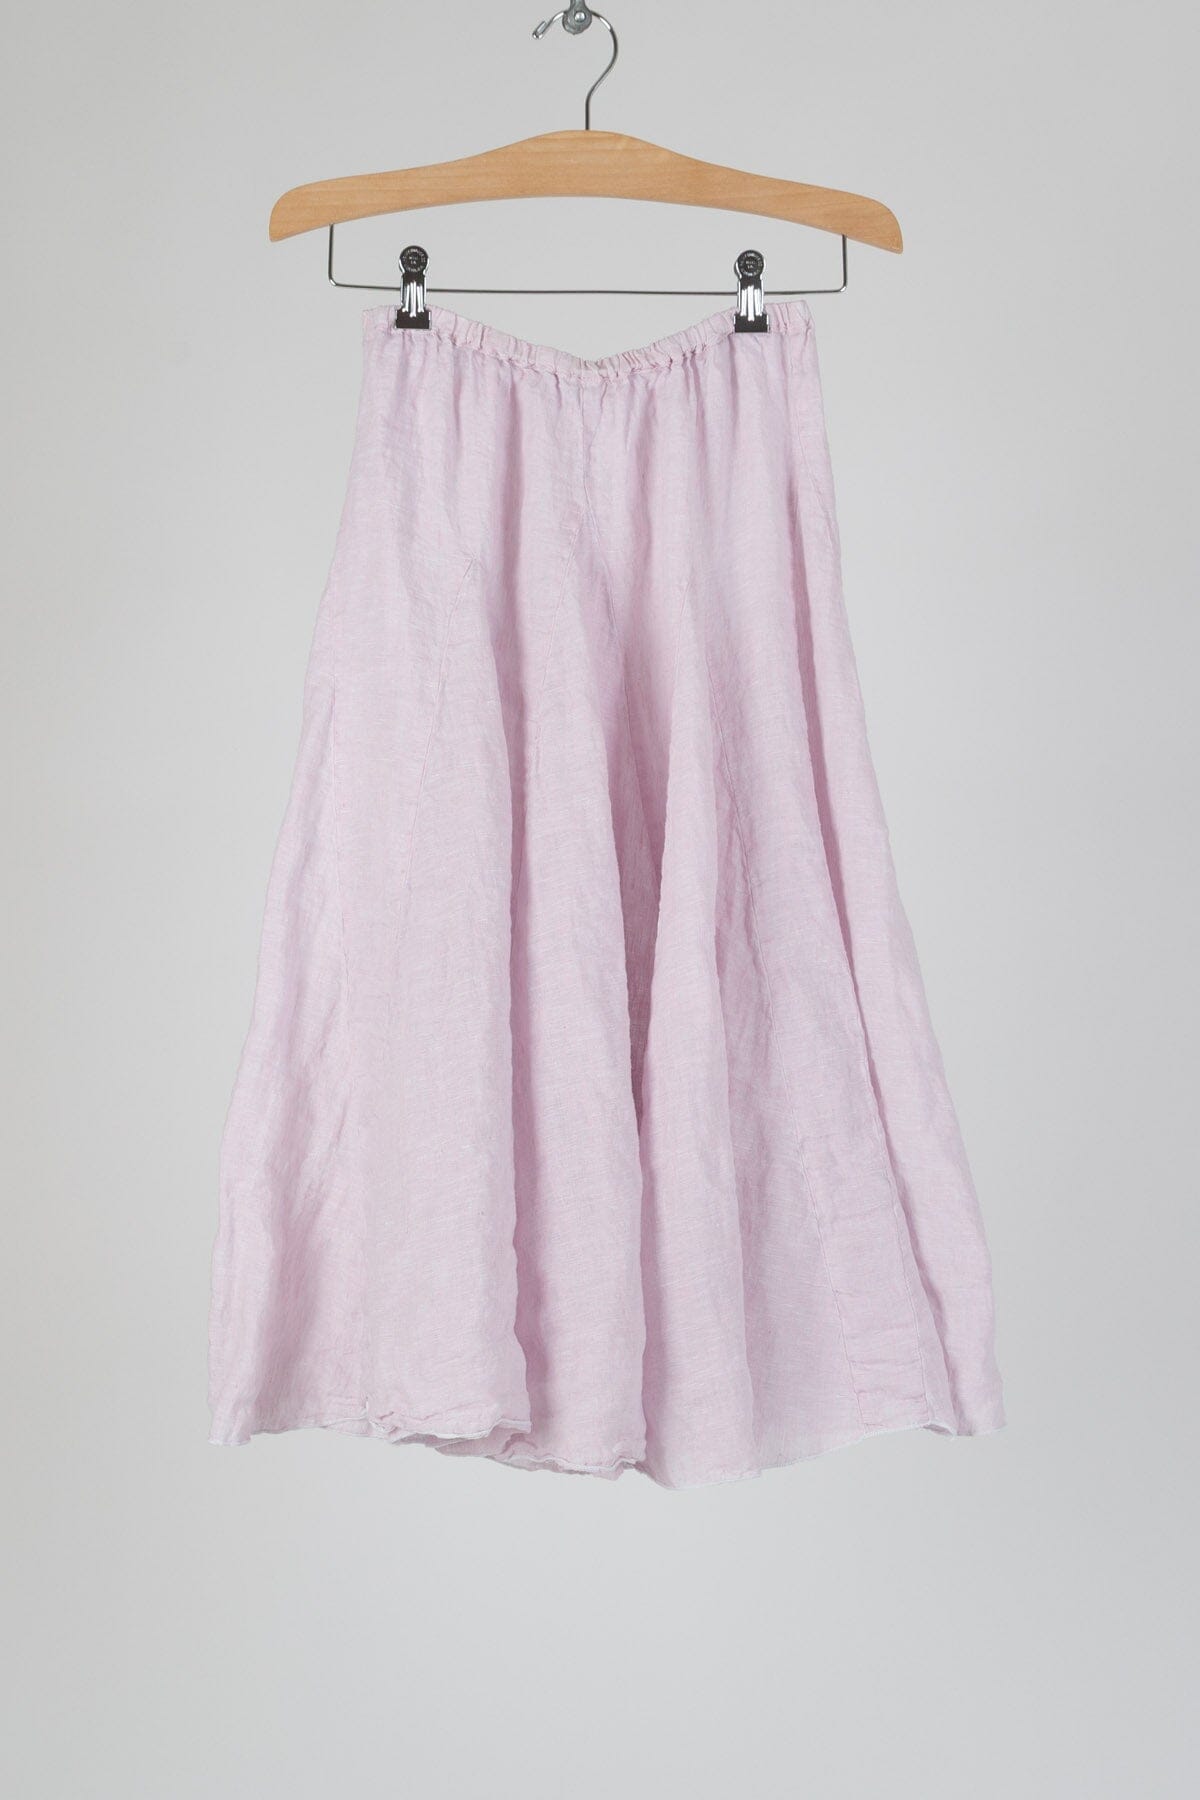 Fanny - Iridescent Linen S15 - Iridescent Skirts/Dresses CP Shades seafoam 161